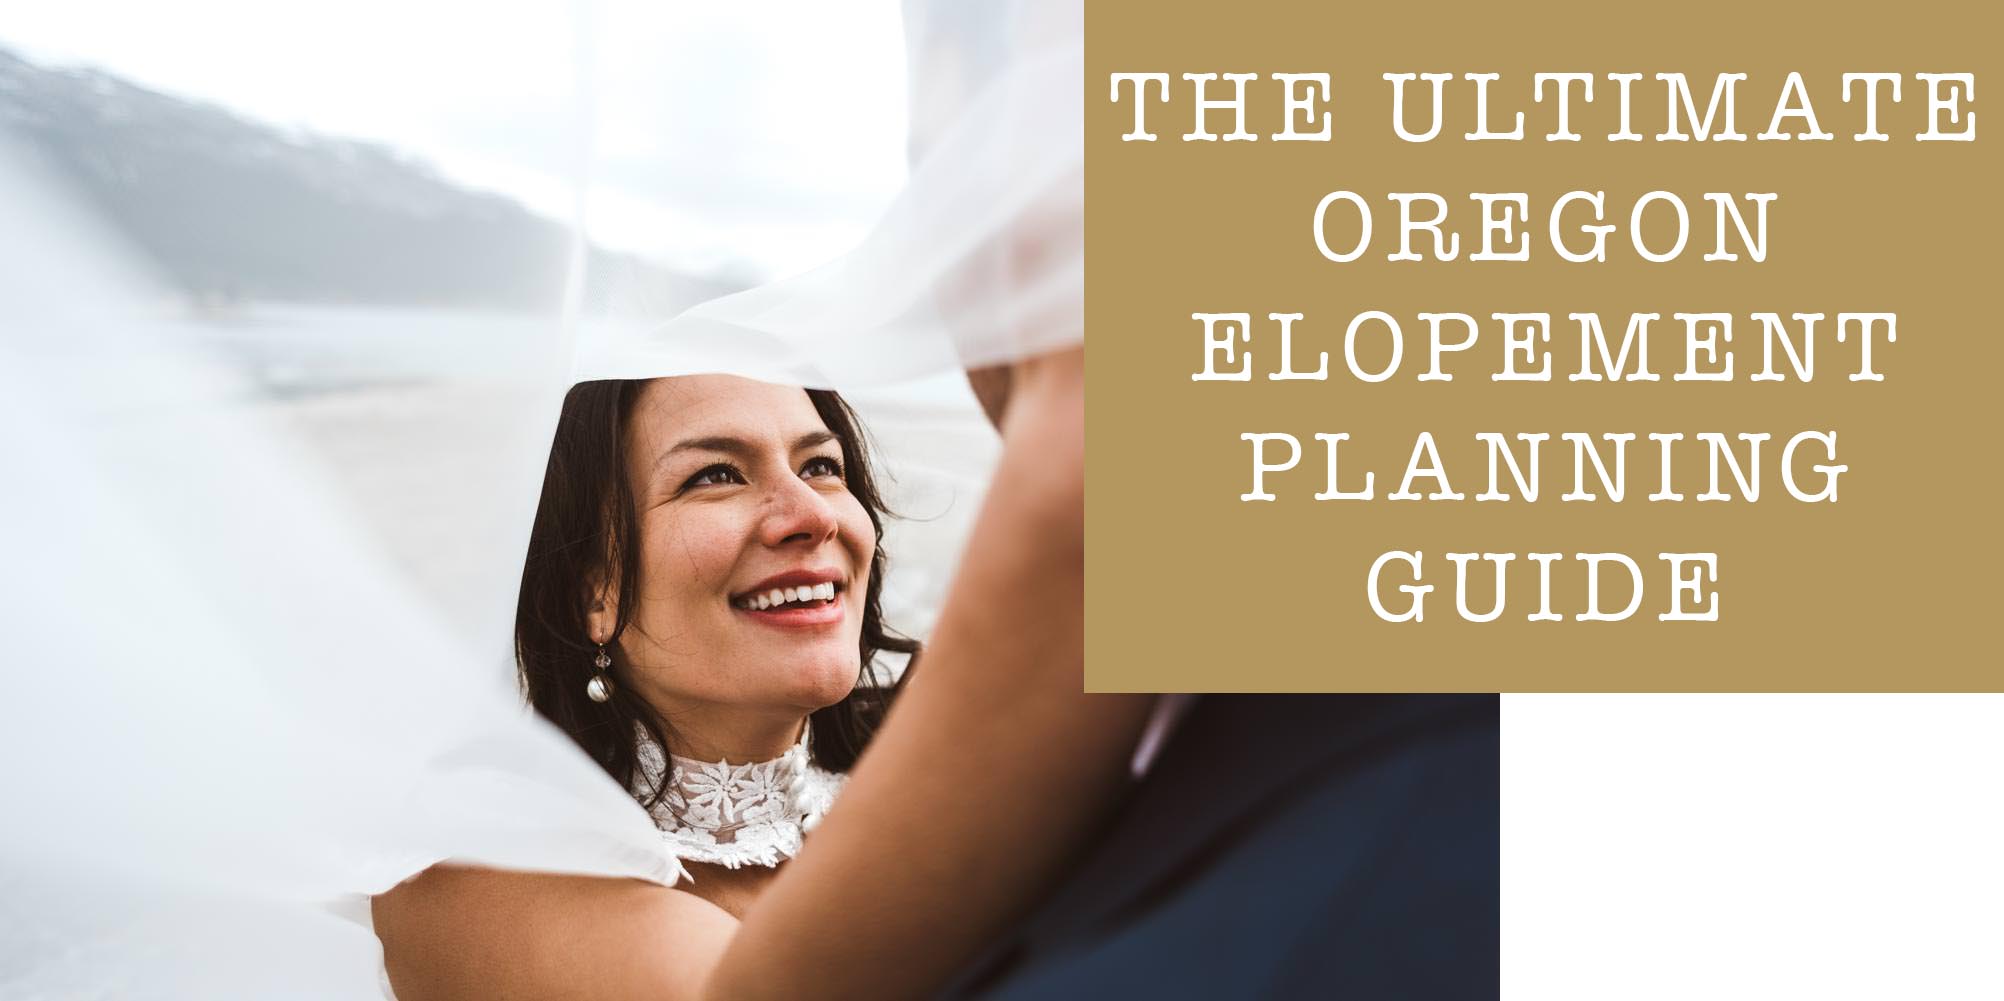 Oregon Elopement Planning Guide Cover